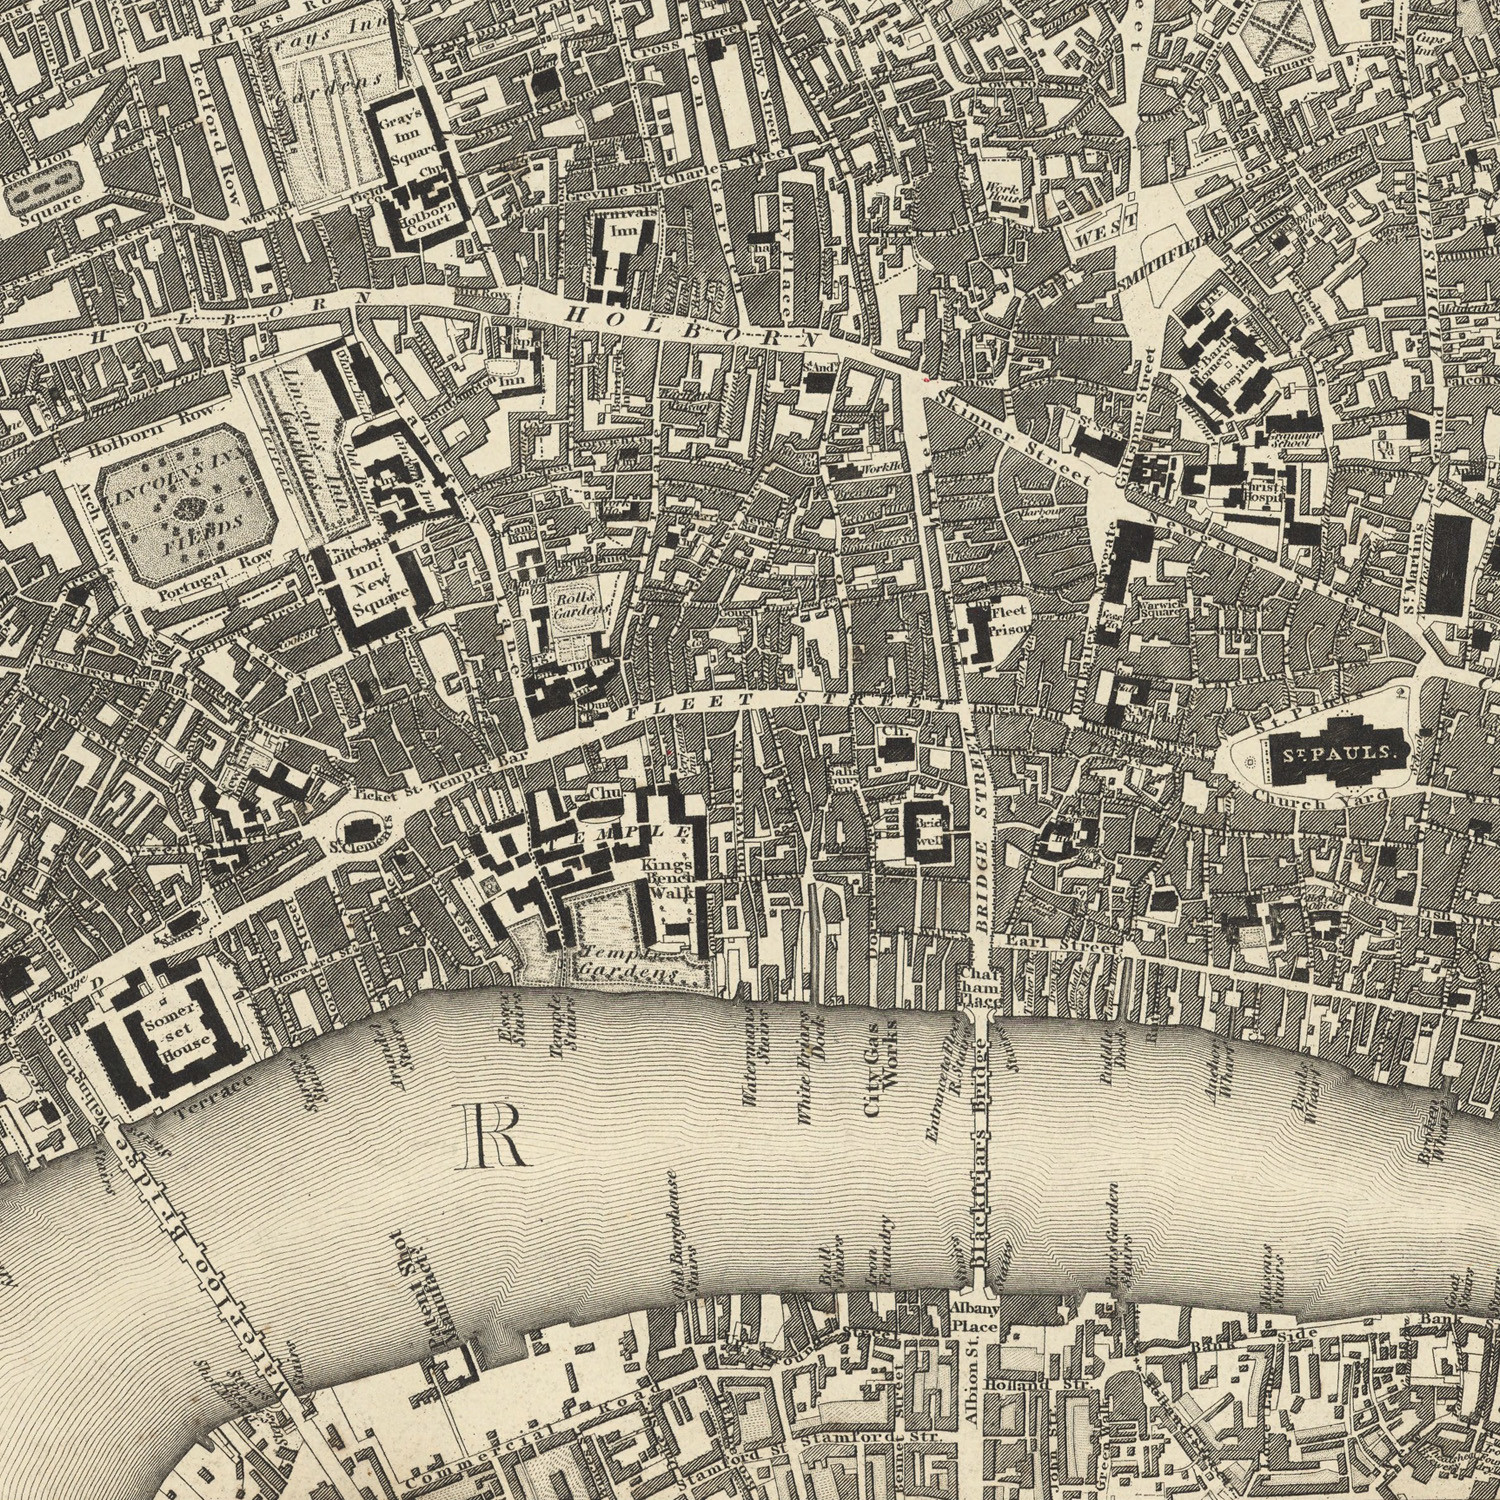 Greenwood’s Six Sheet Map of London // Original Color (41